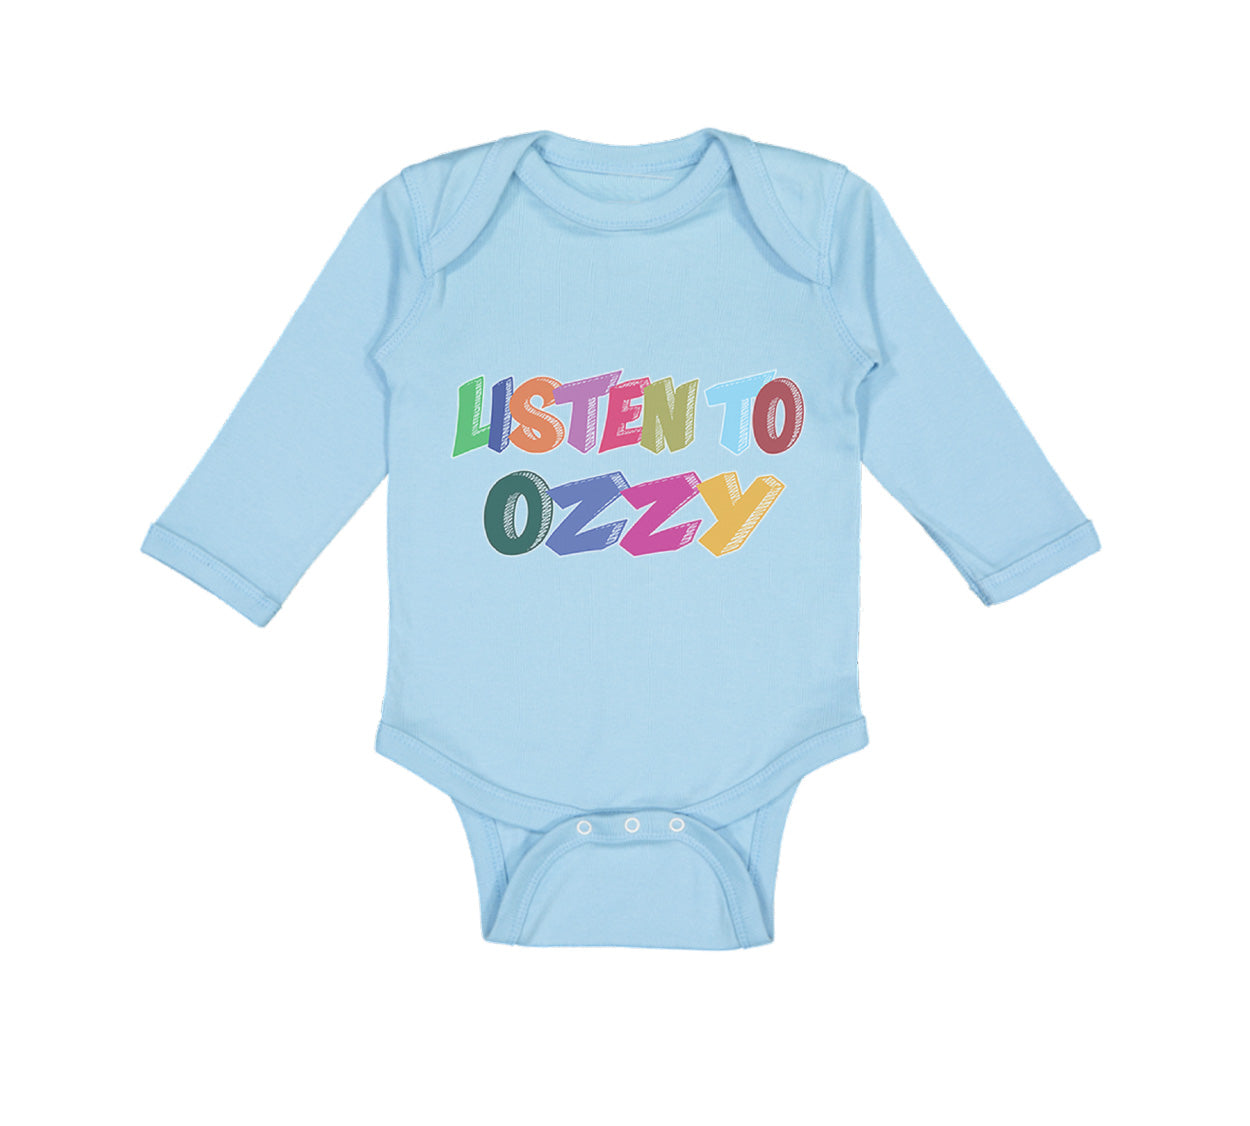 Cute Rascals® Long Sleeve Bodysuit Baby Flag Poland Polska States